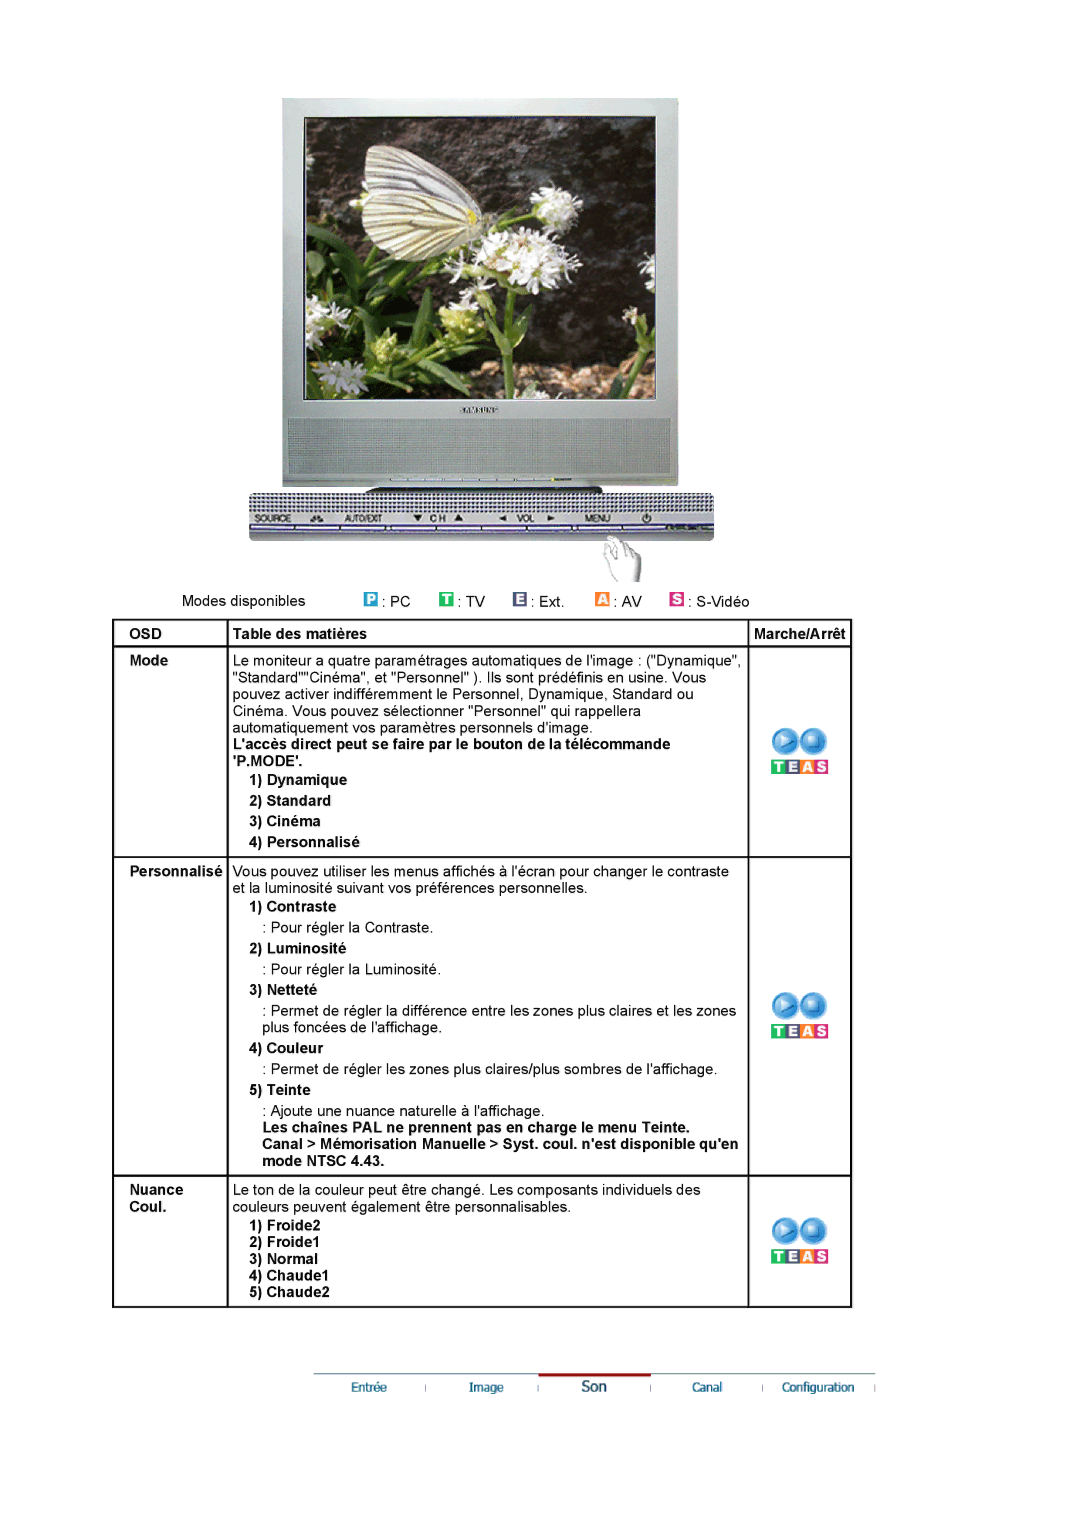 Samsung LS17MCASS/EDC manual Mode, Netteté, Teinte, Froide2 Froide1 Normal Chaude1 Chaude2 